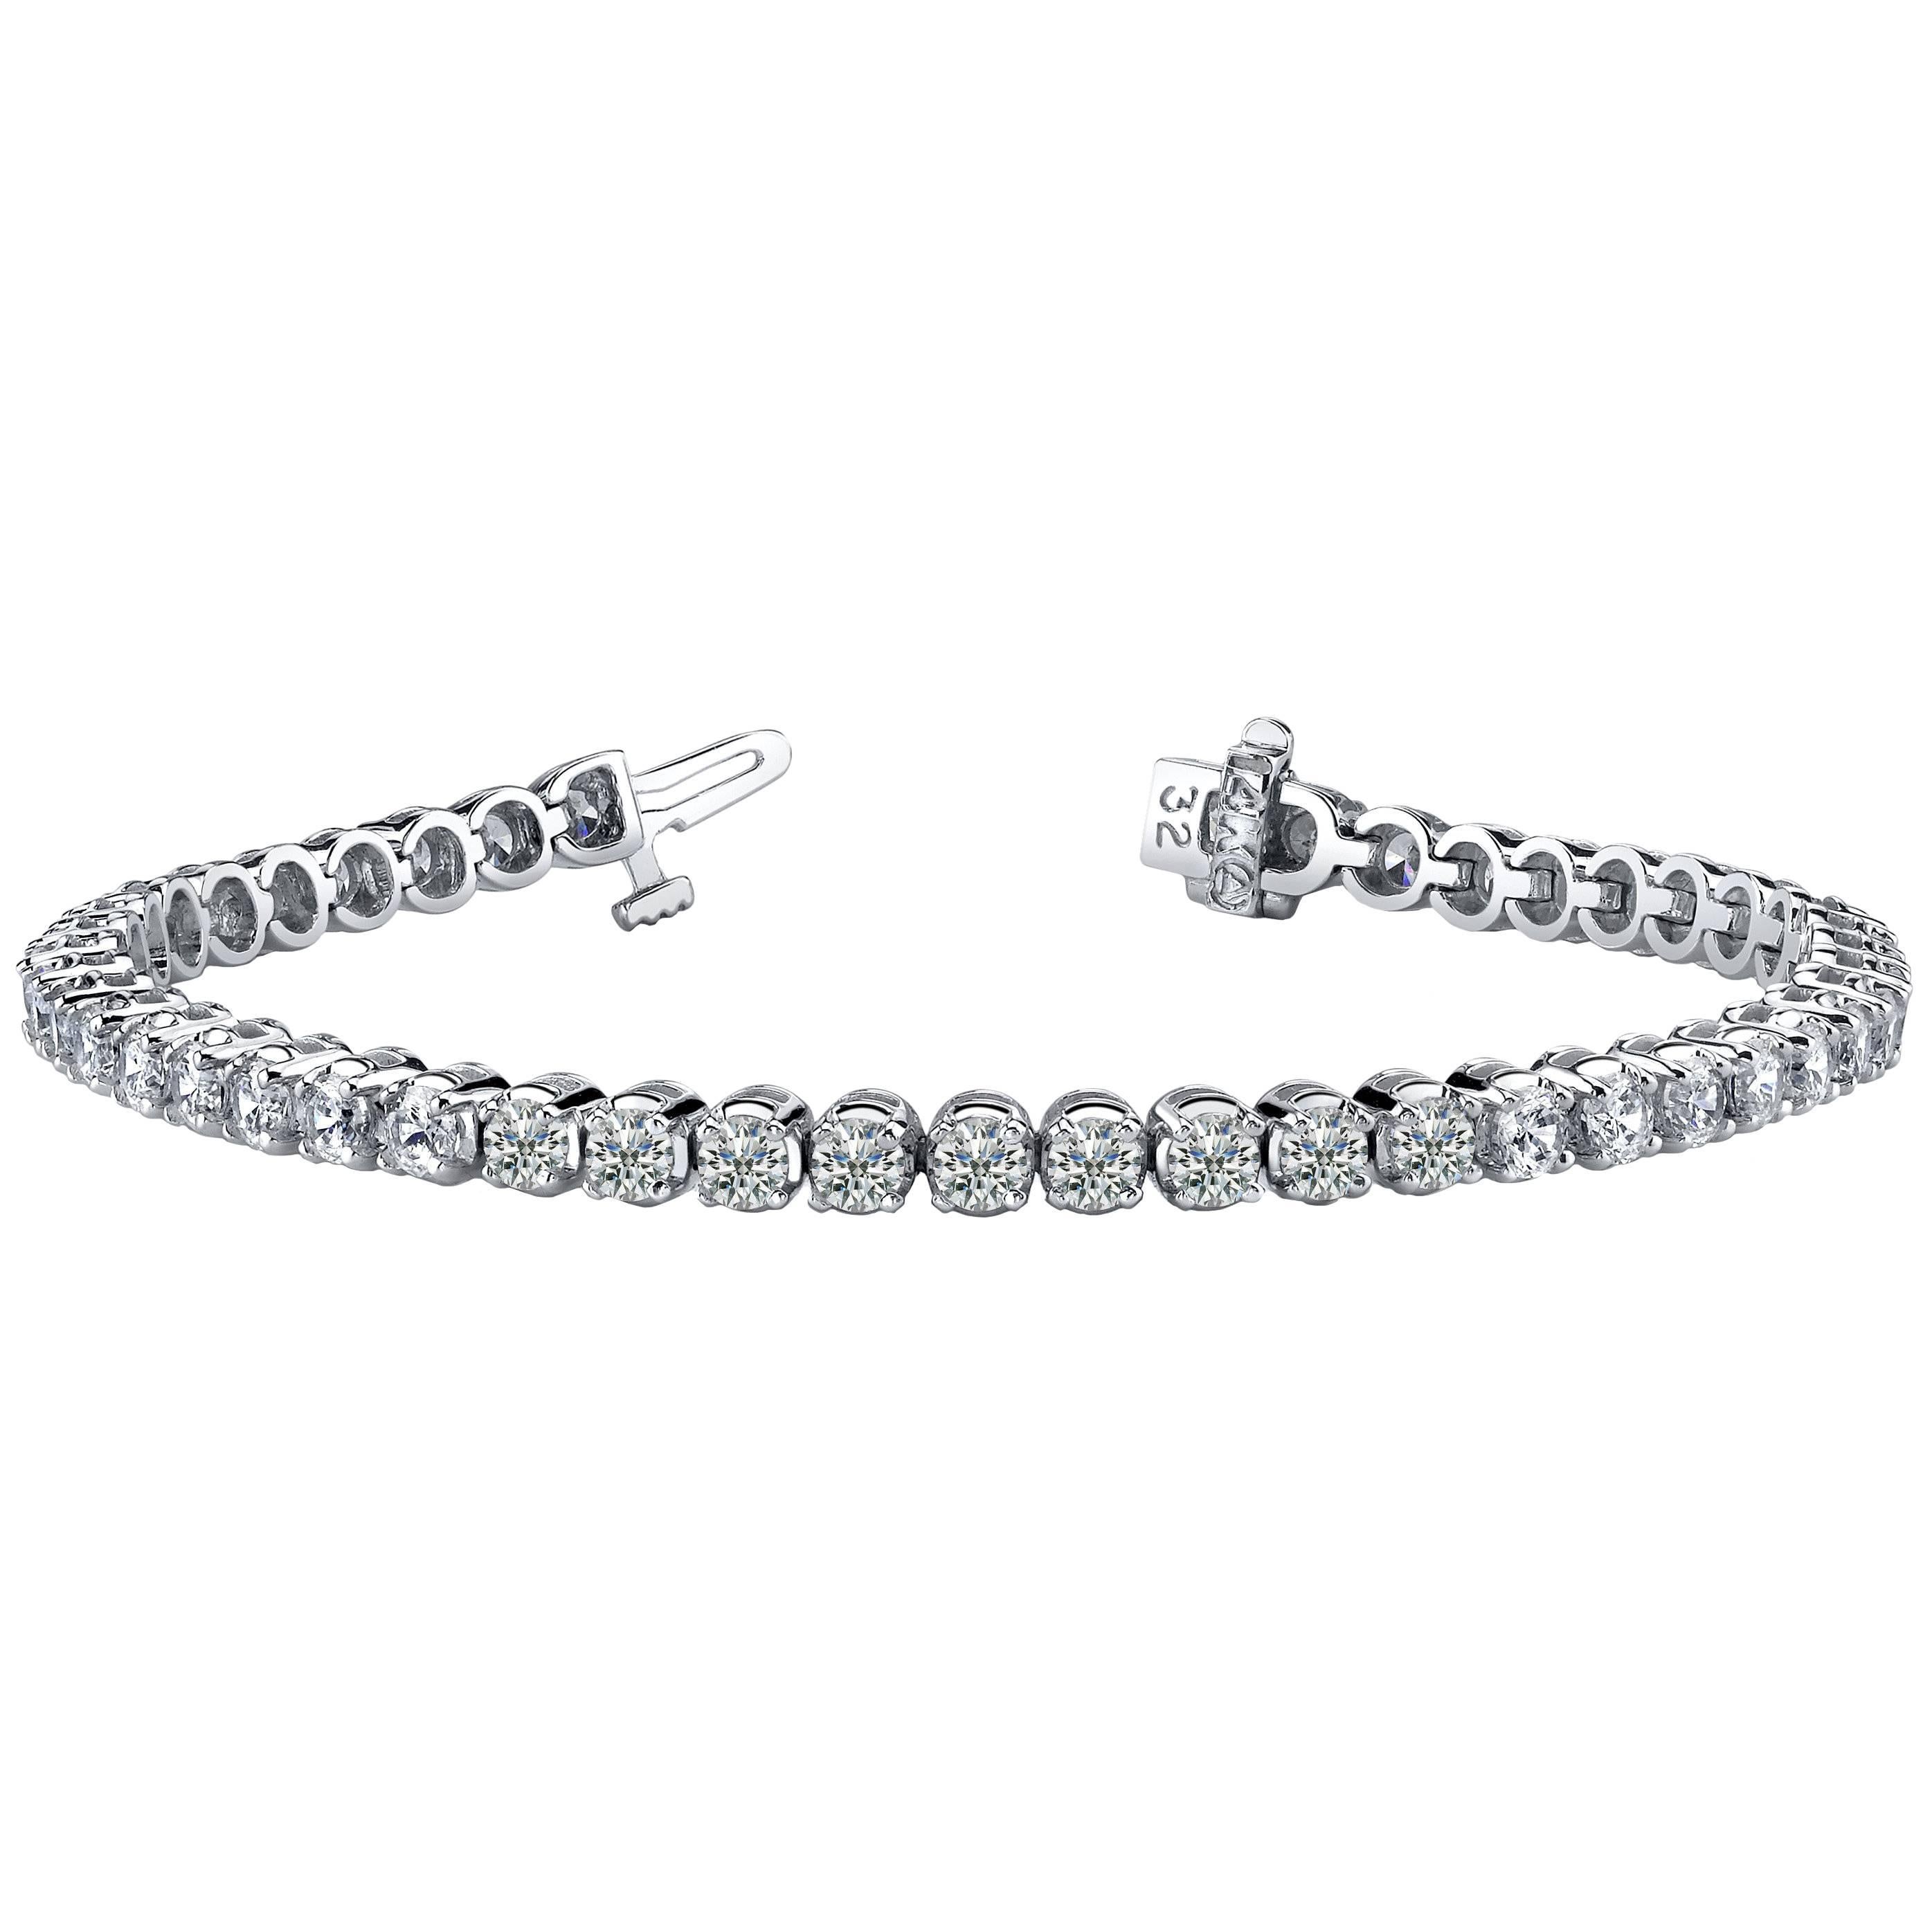 13.00 Carat Diamond Bracelet Set in Platinum